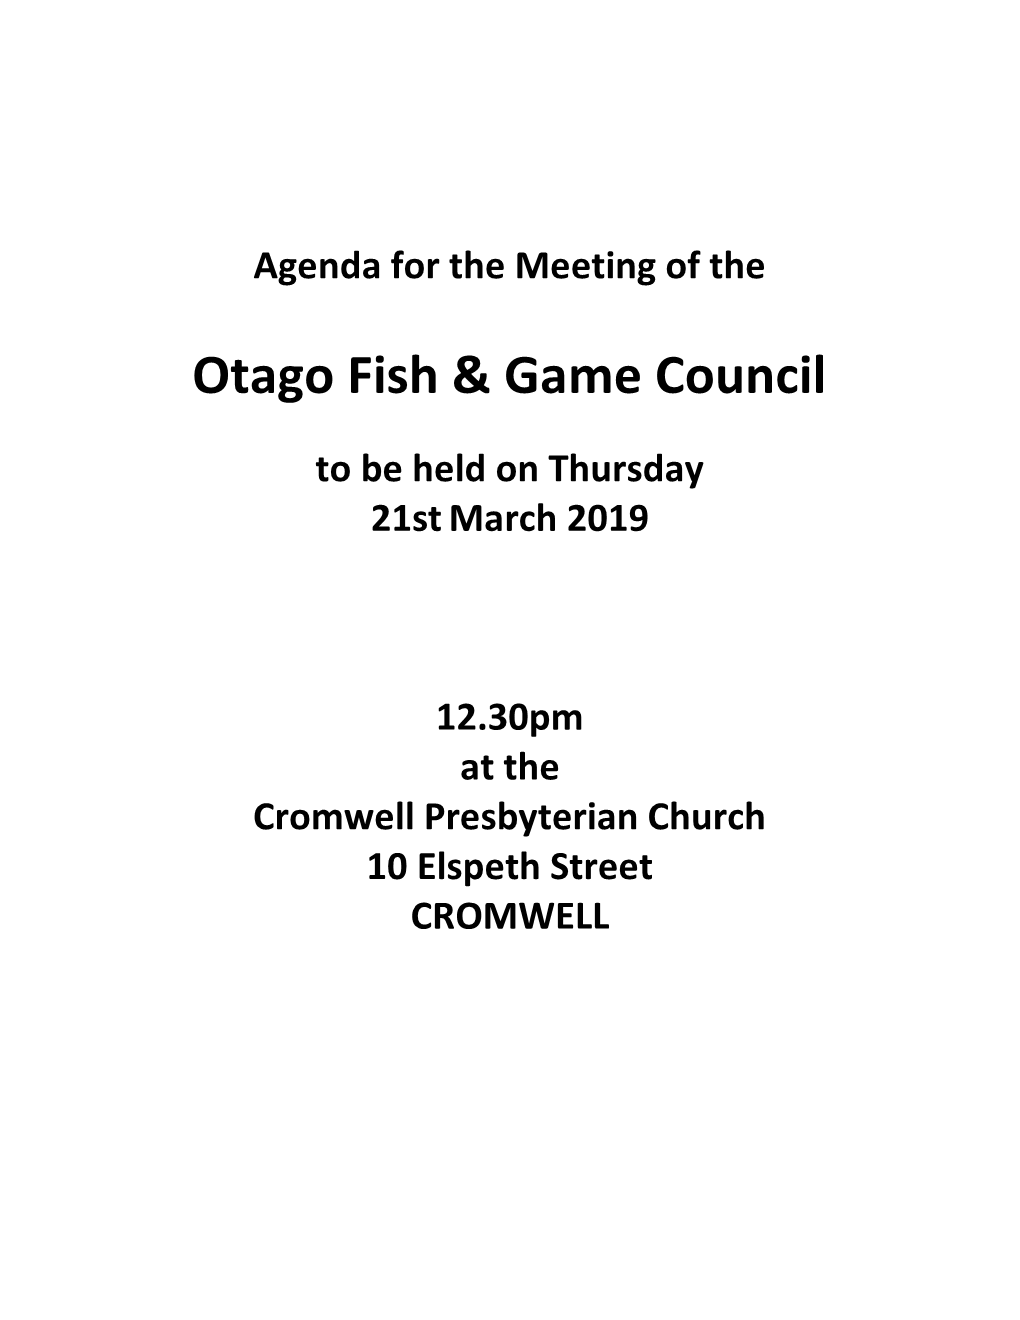 Otago Fish & Game Council